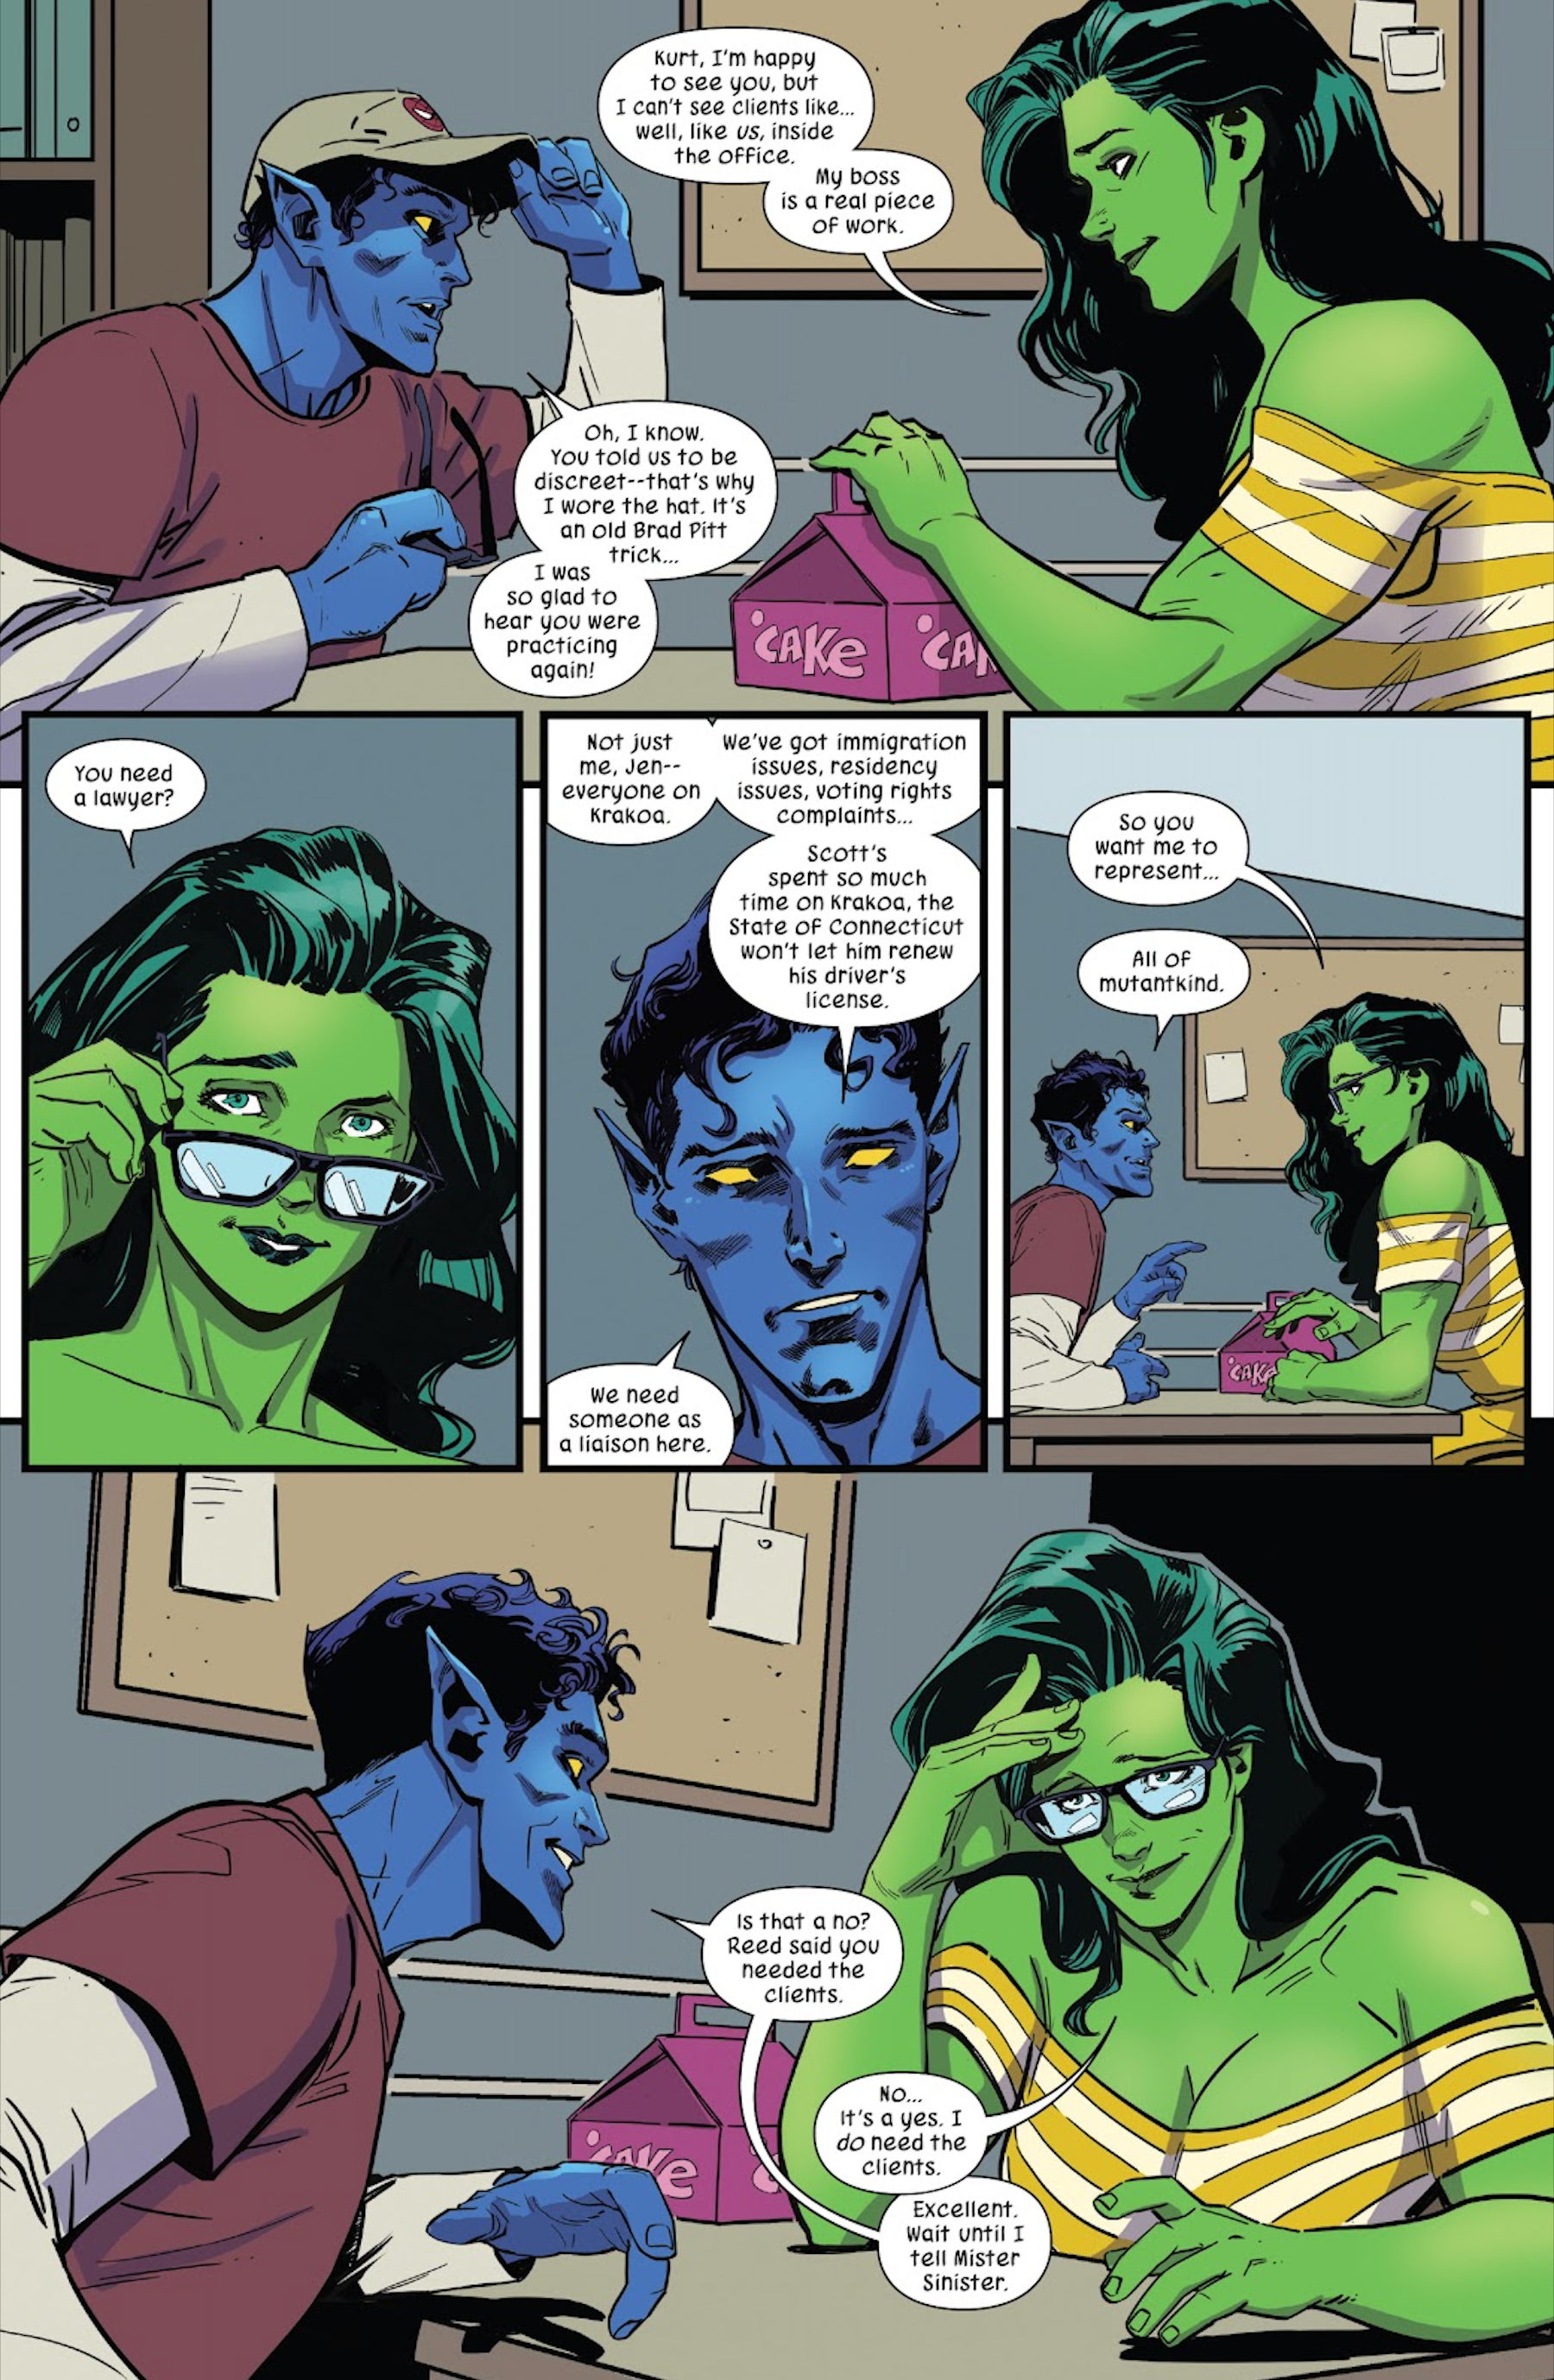 She-Hulk and Nightcrawler represent Krakoa